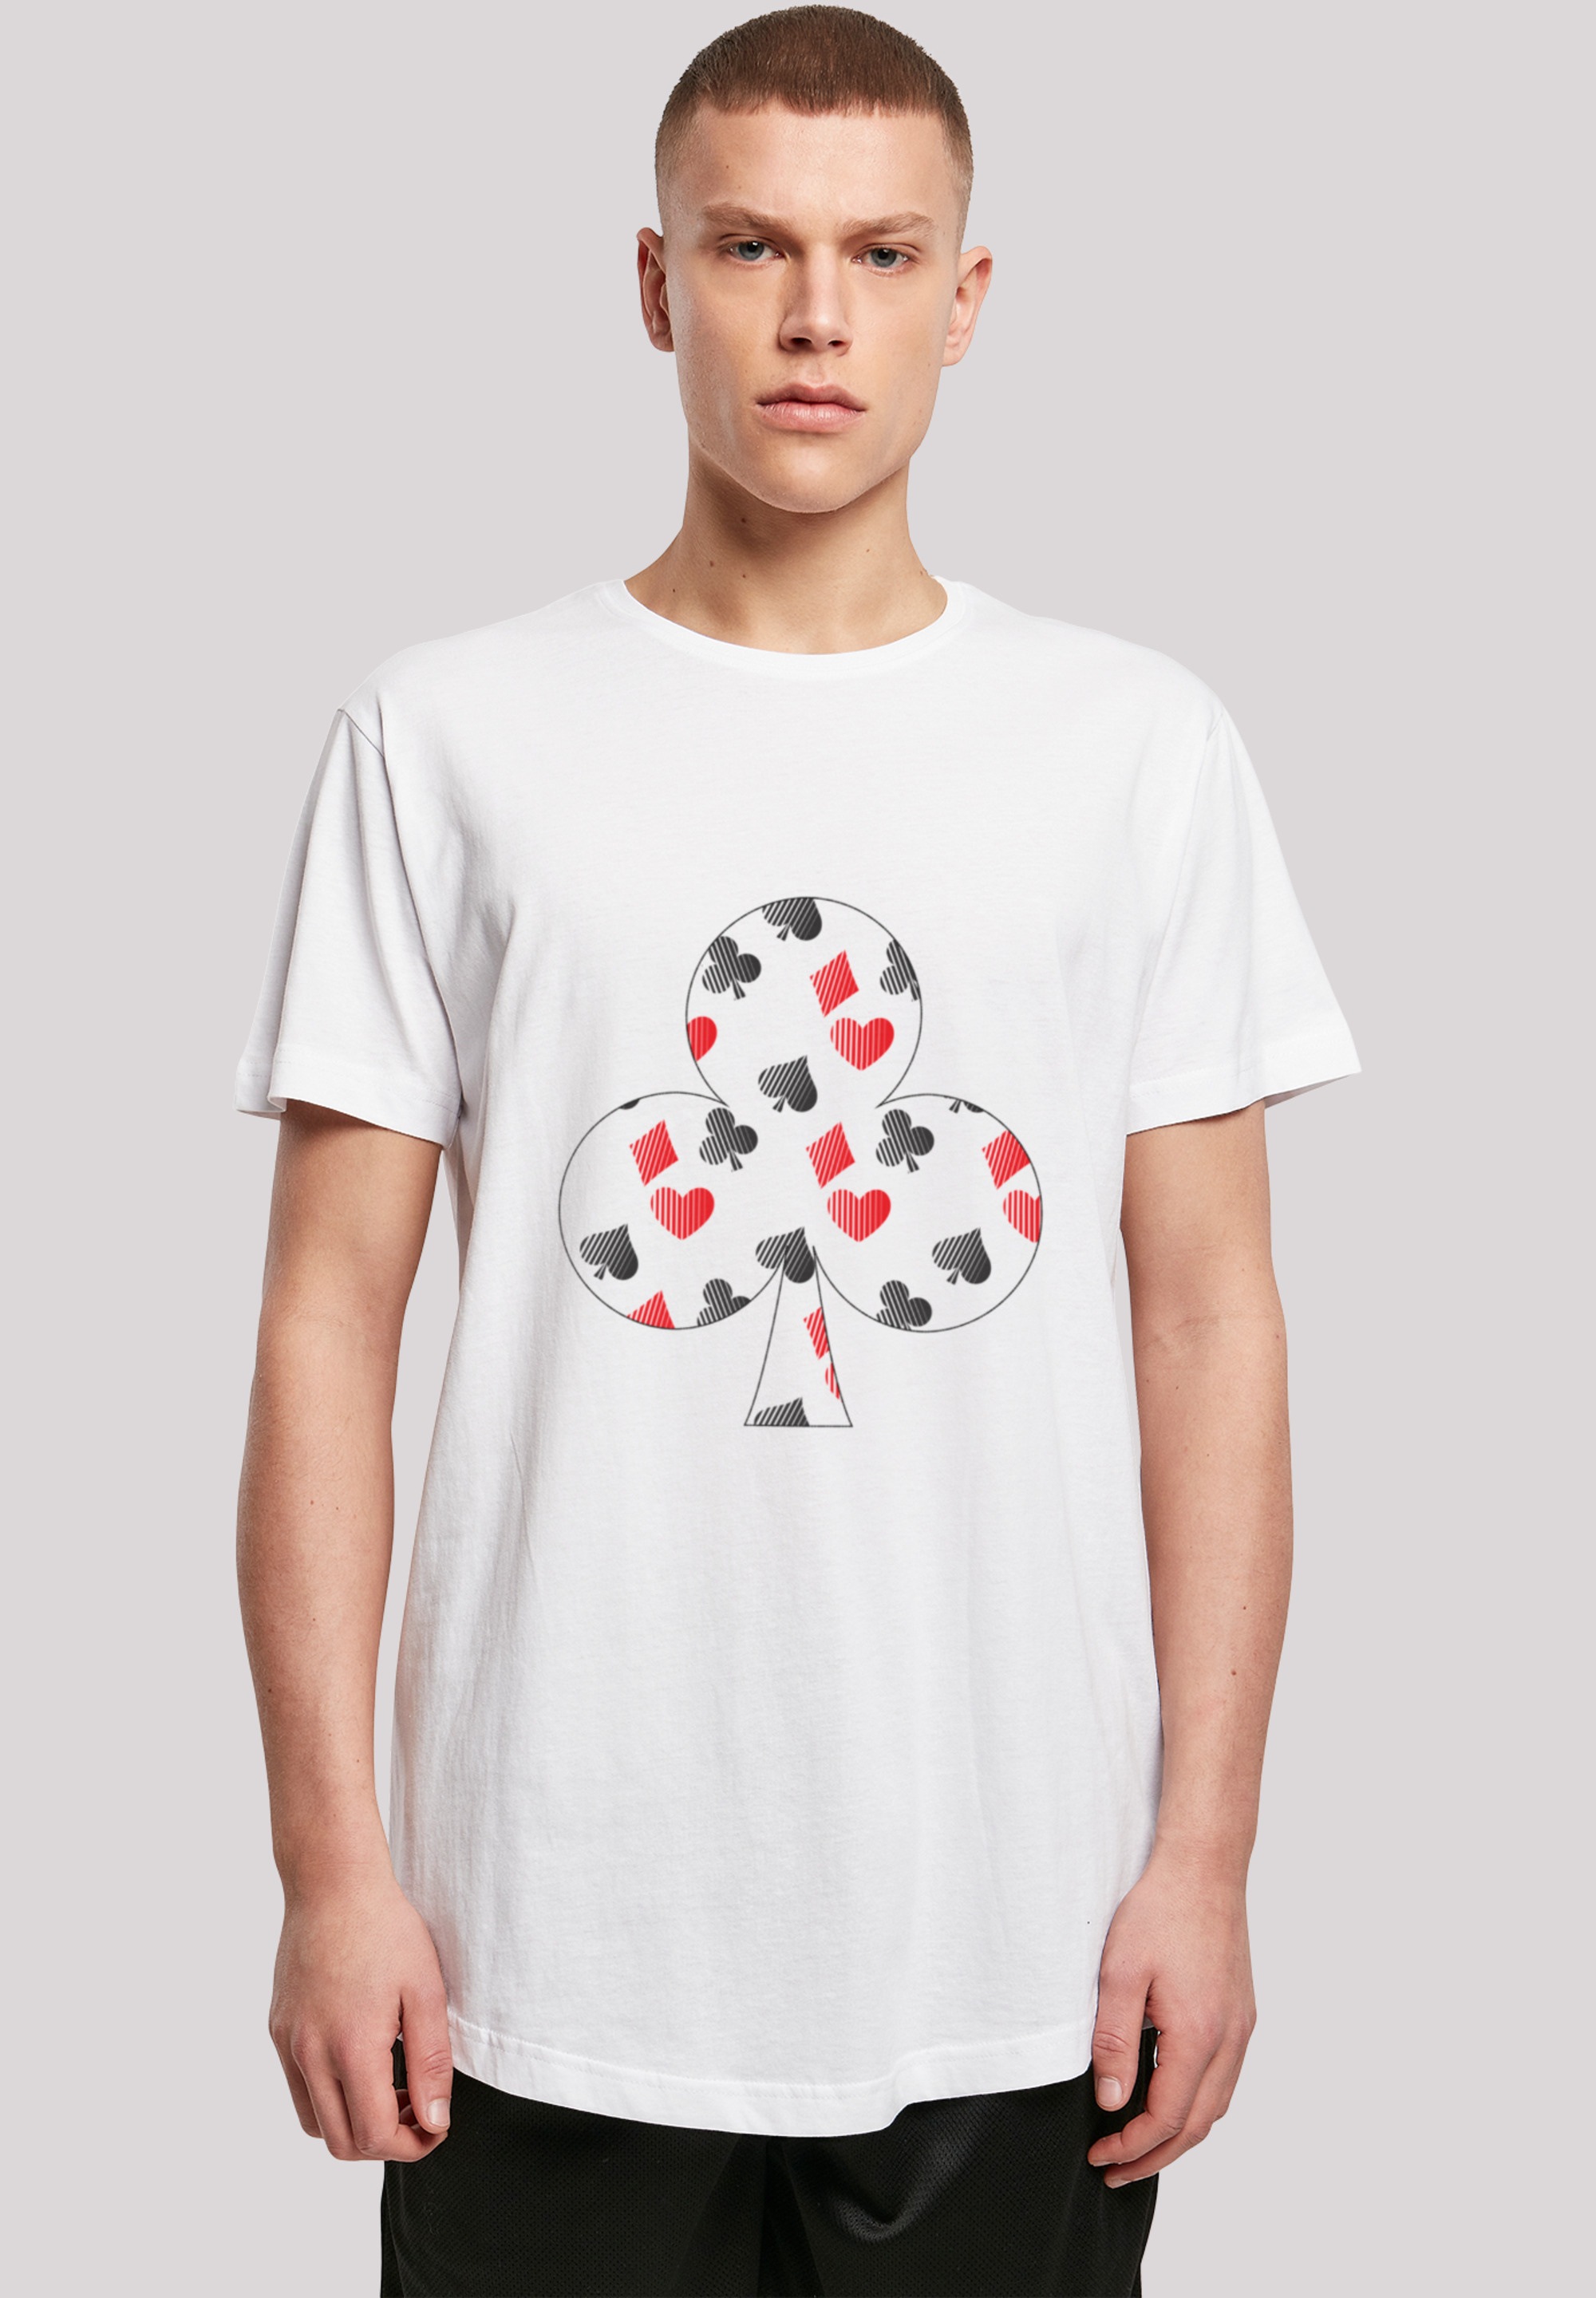 T-Shirt »Kartenspiel Kreuz Herz Karo Pik Poker«, Print